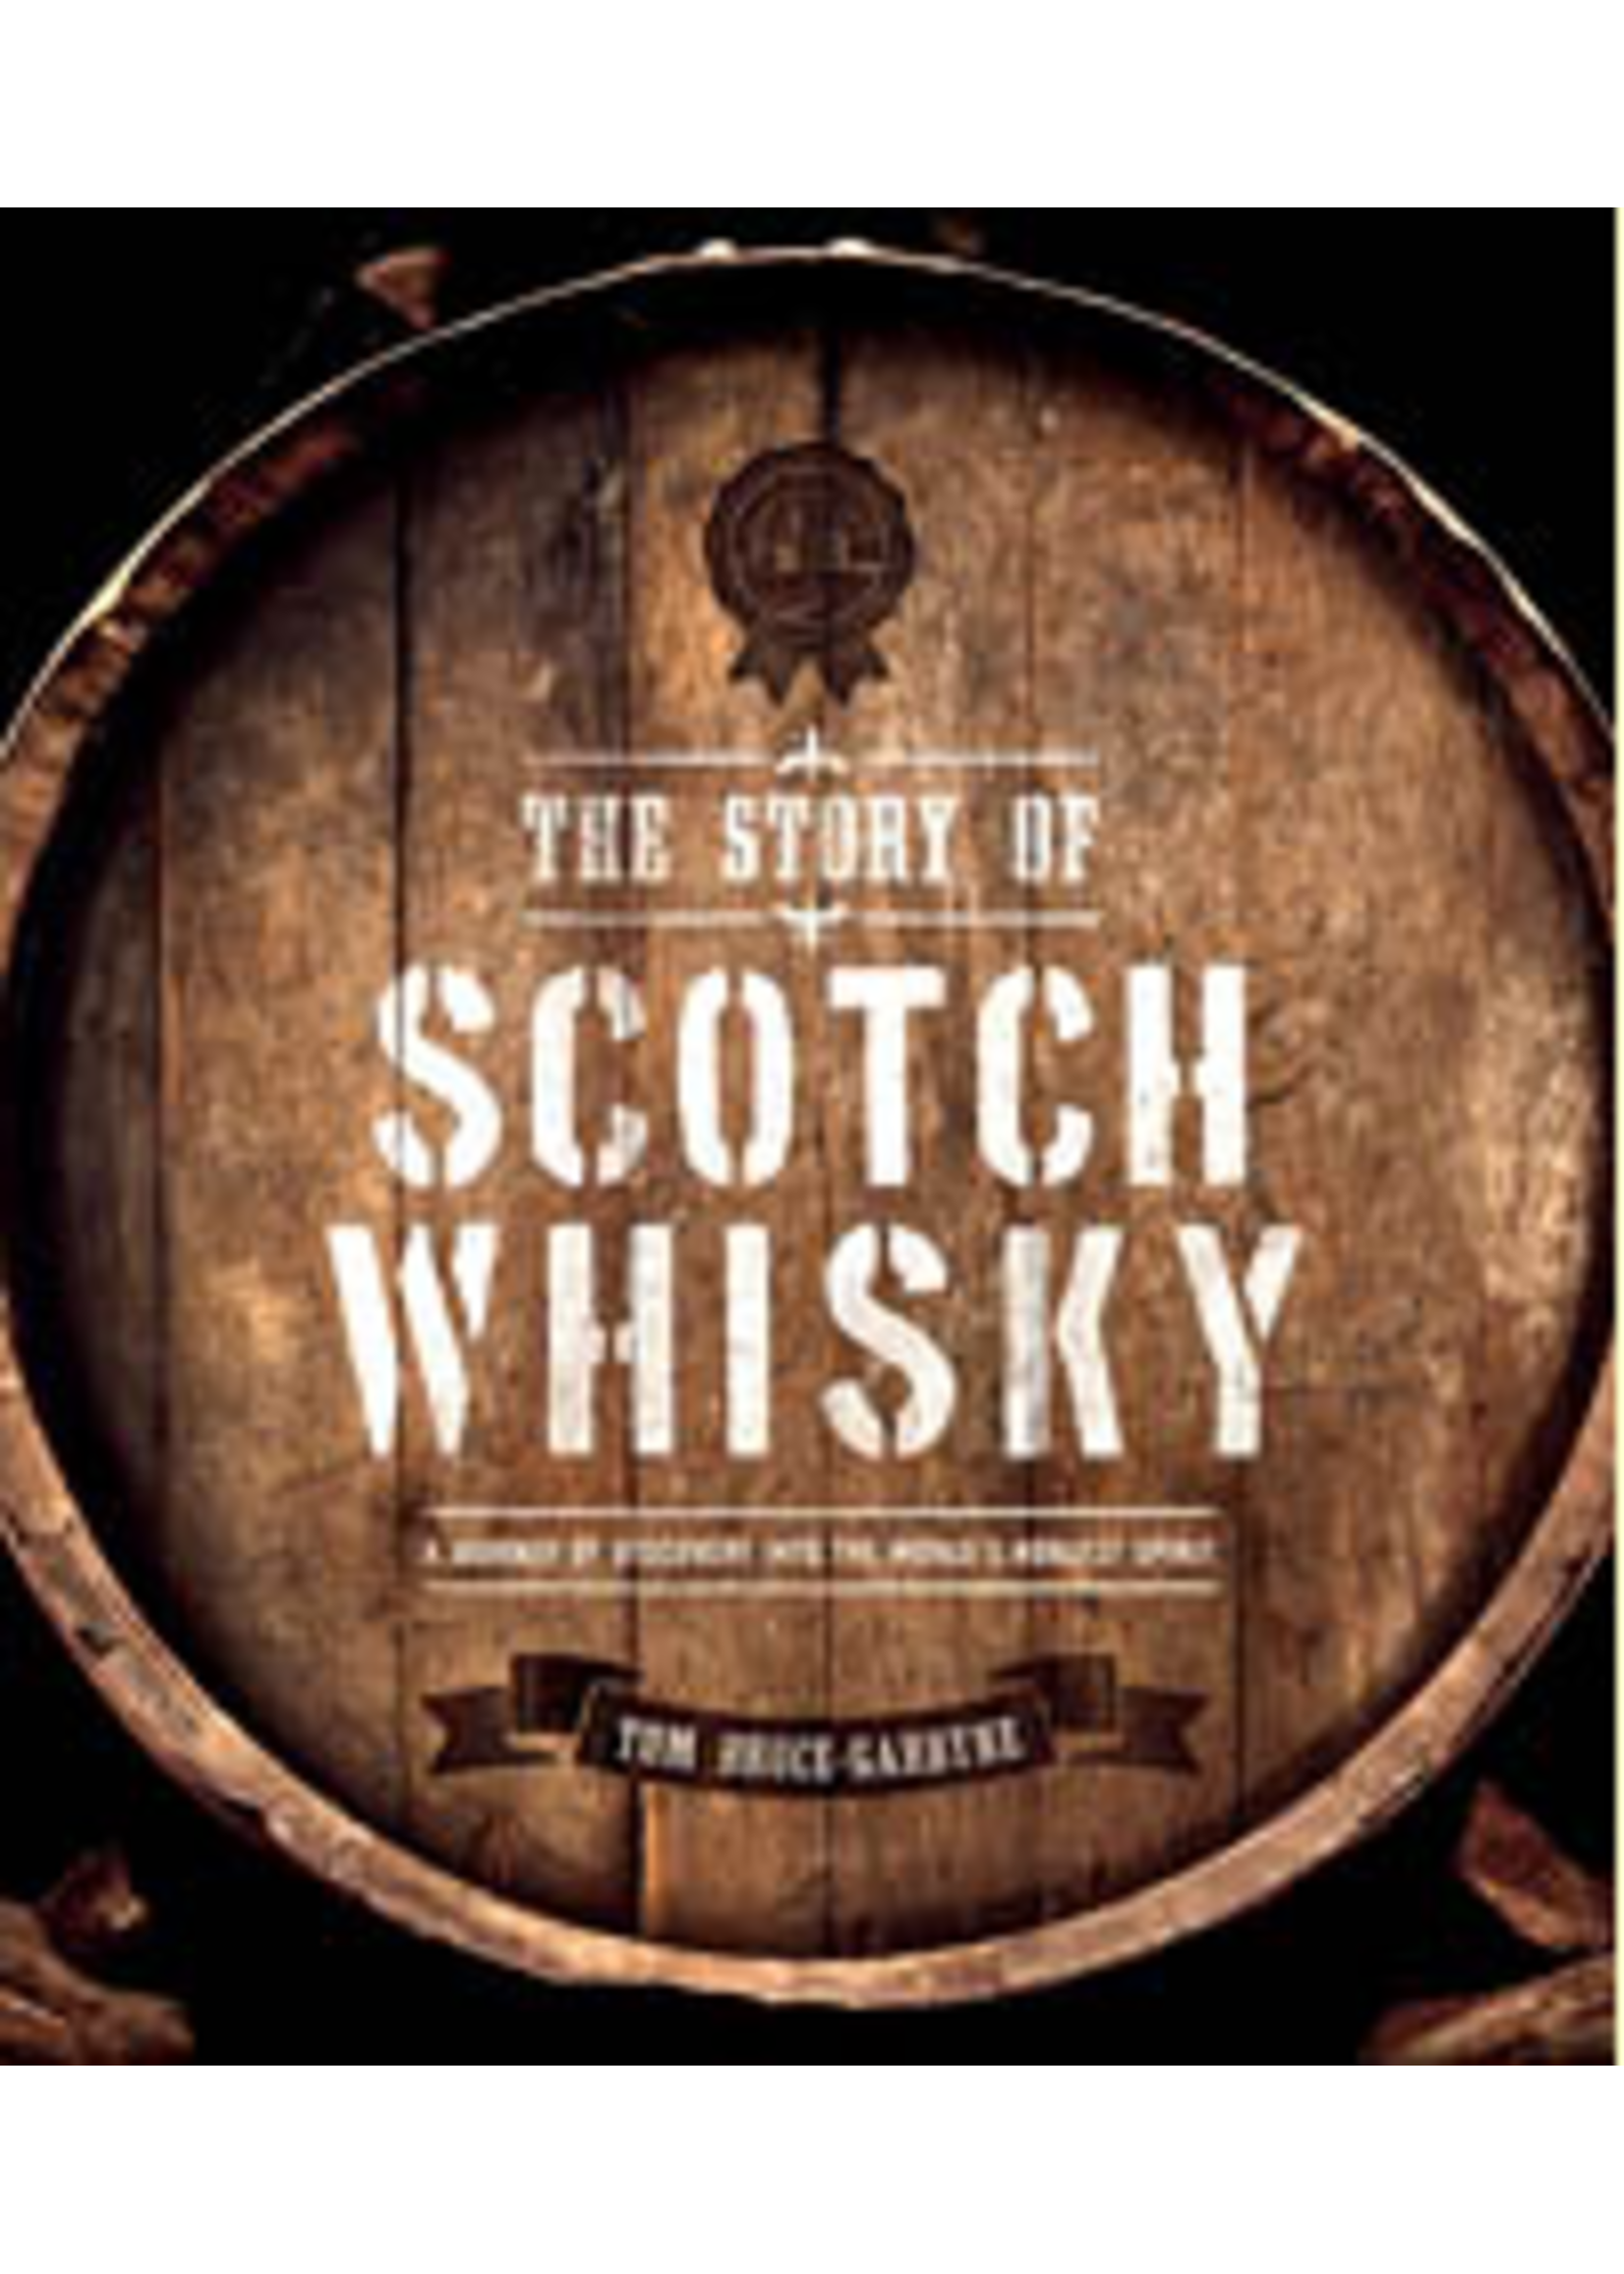 Website Story of Scotch Whiskey